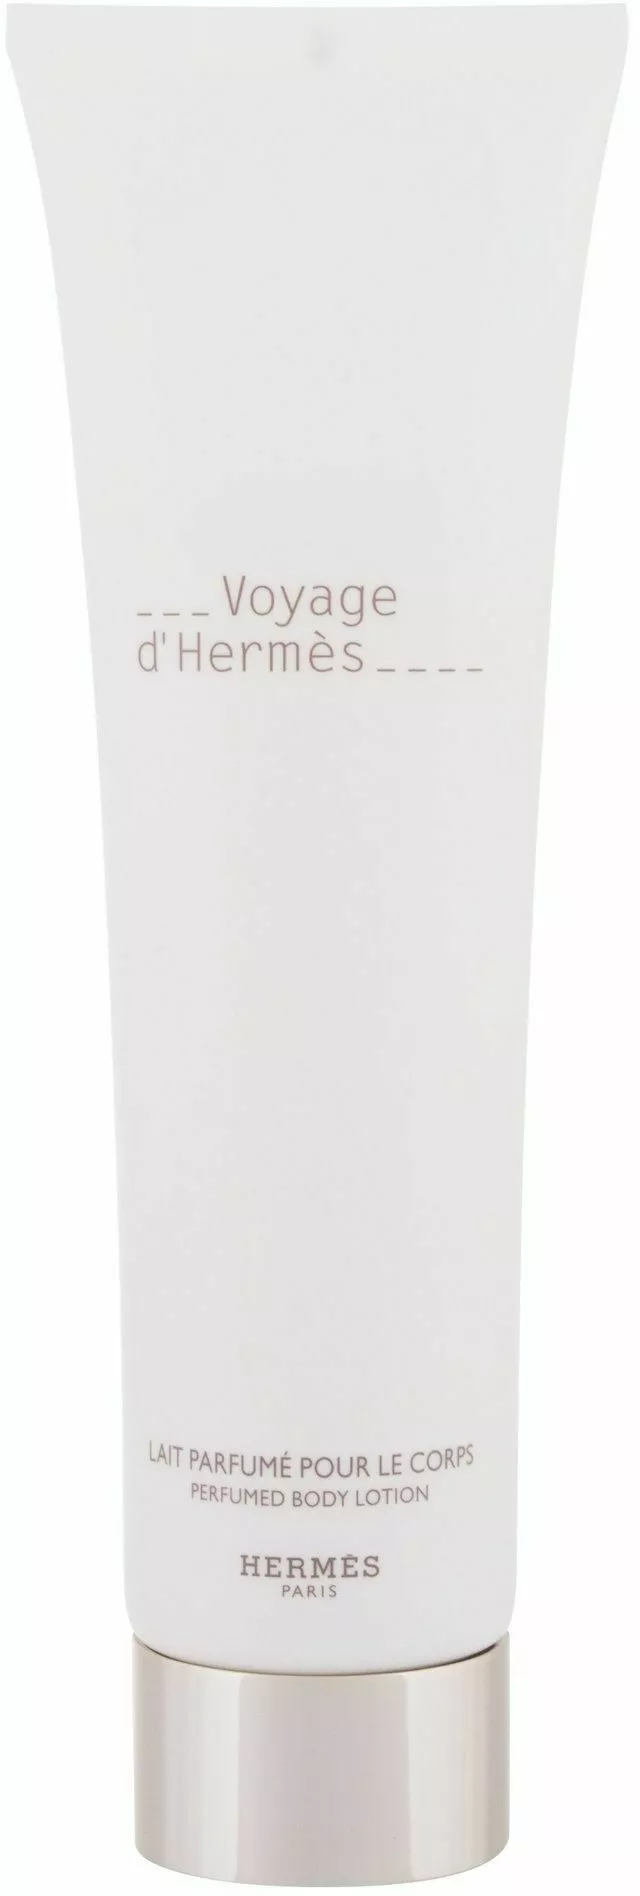 hermes voyage d hermes mleczko do ciala 150 ml